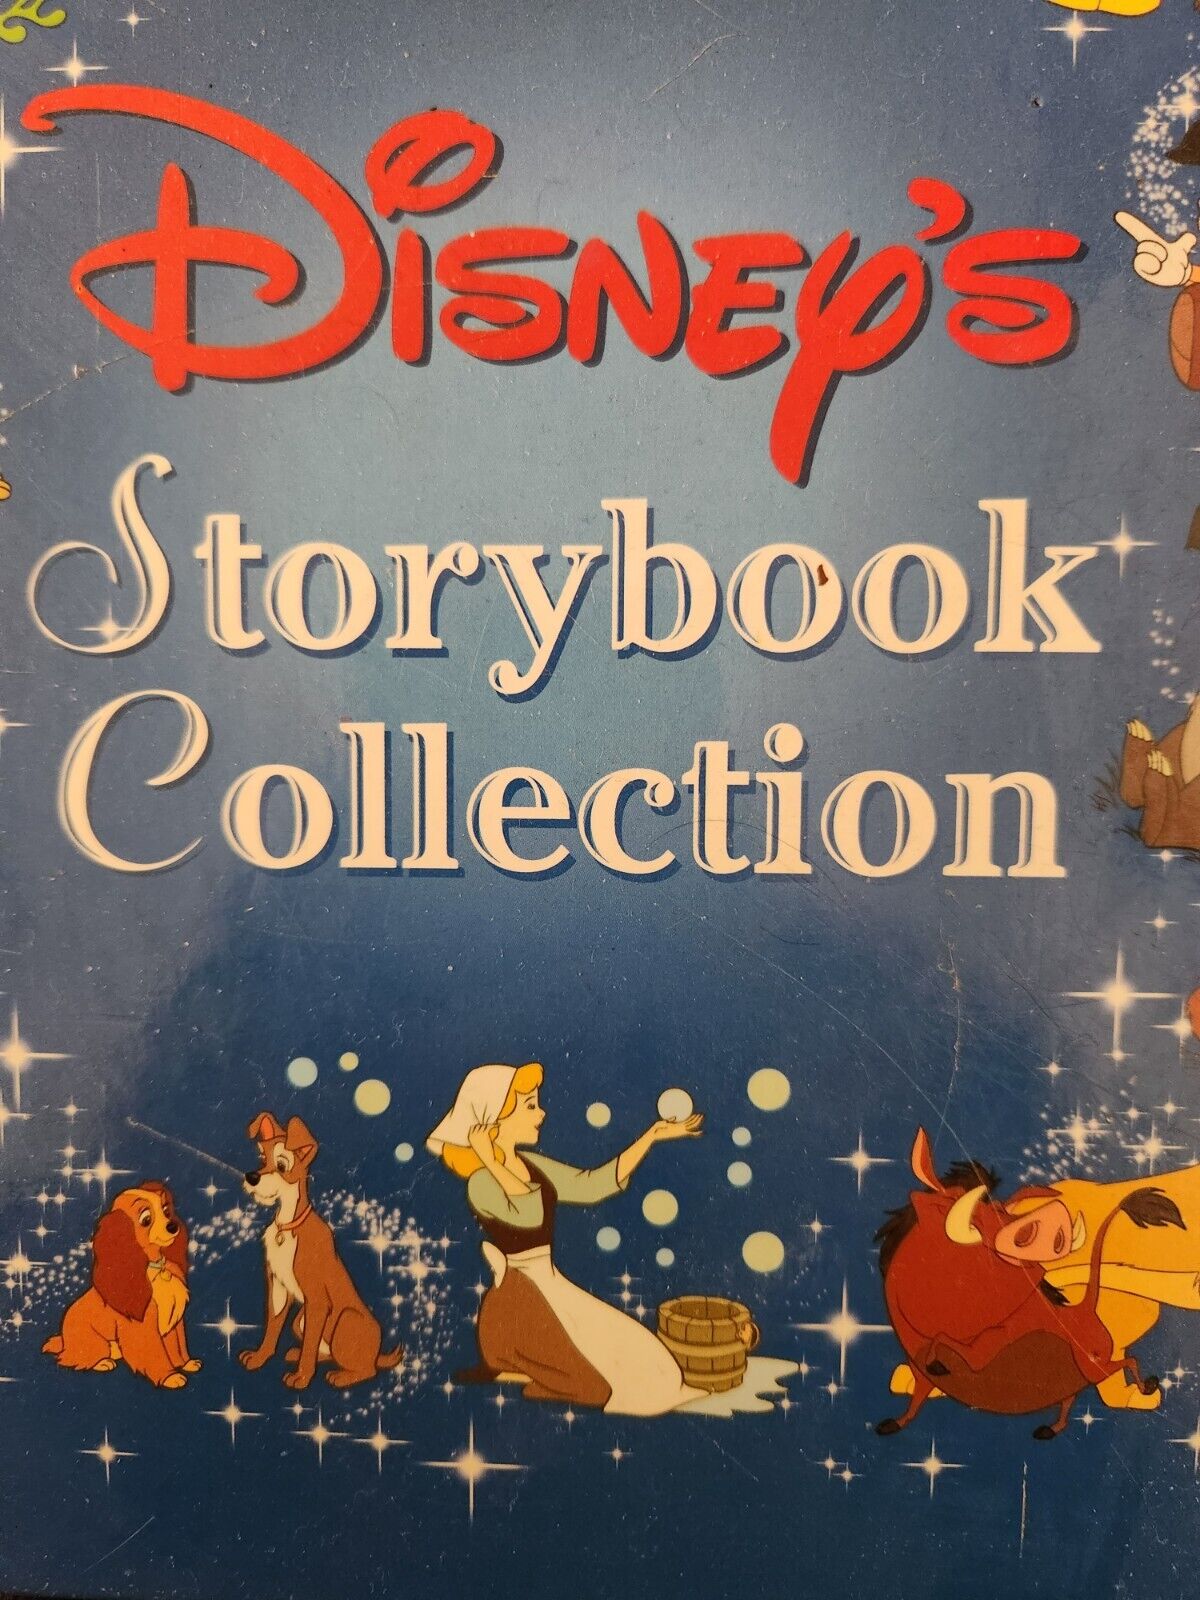 ***ERROR******Disney’s Storybook Collection 23 Stories #MANDELAEFFECT   1998